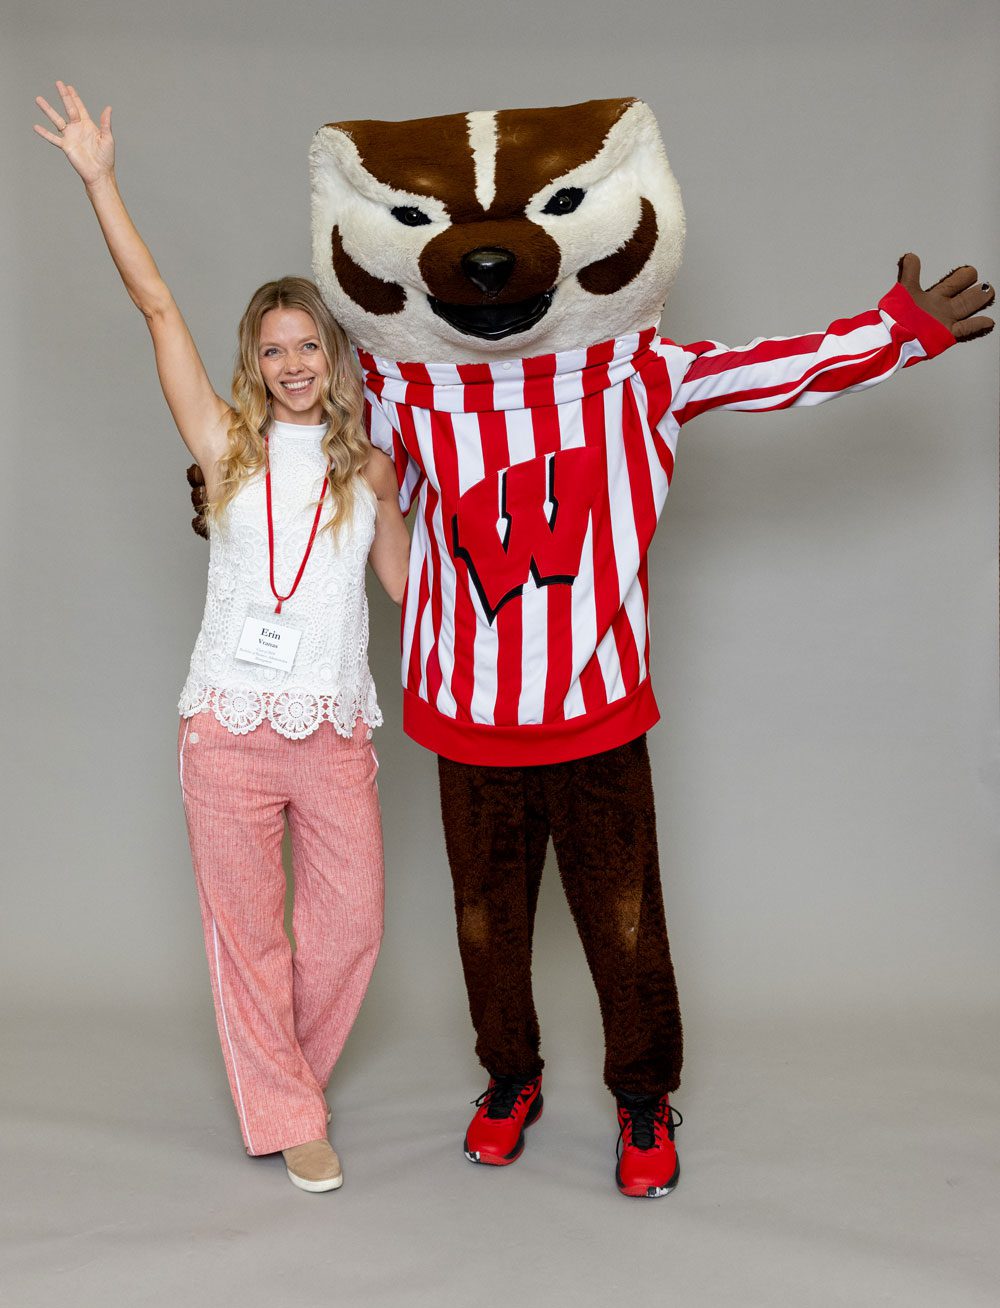 Erin posing with Bucky Badger